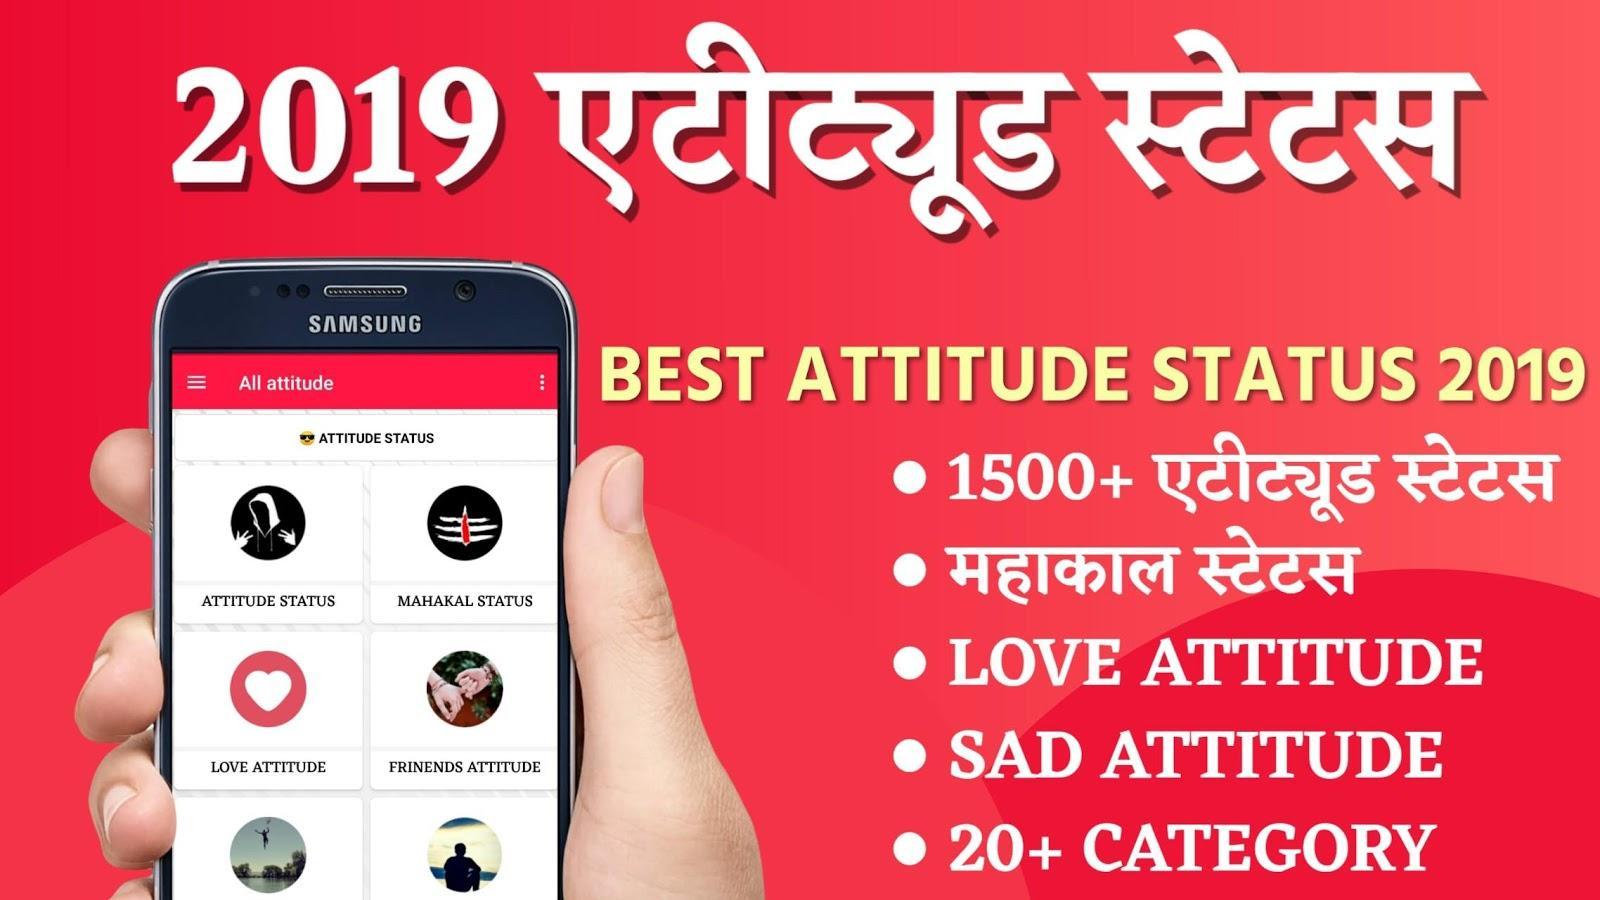 Attitude status in hindi wallpaper download. 